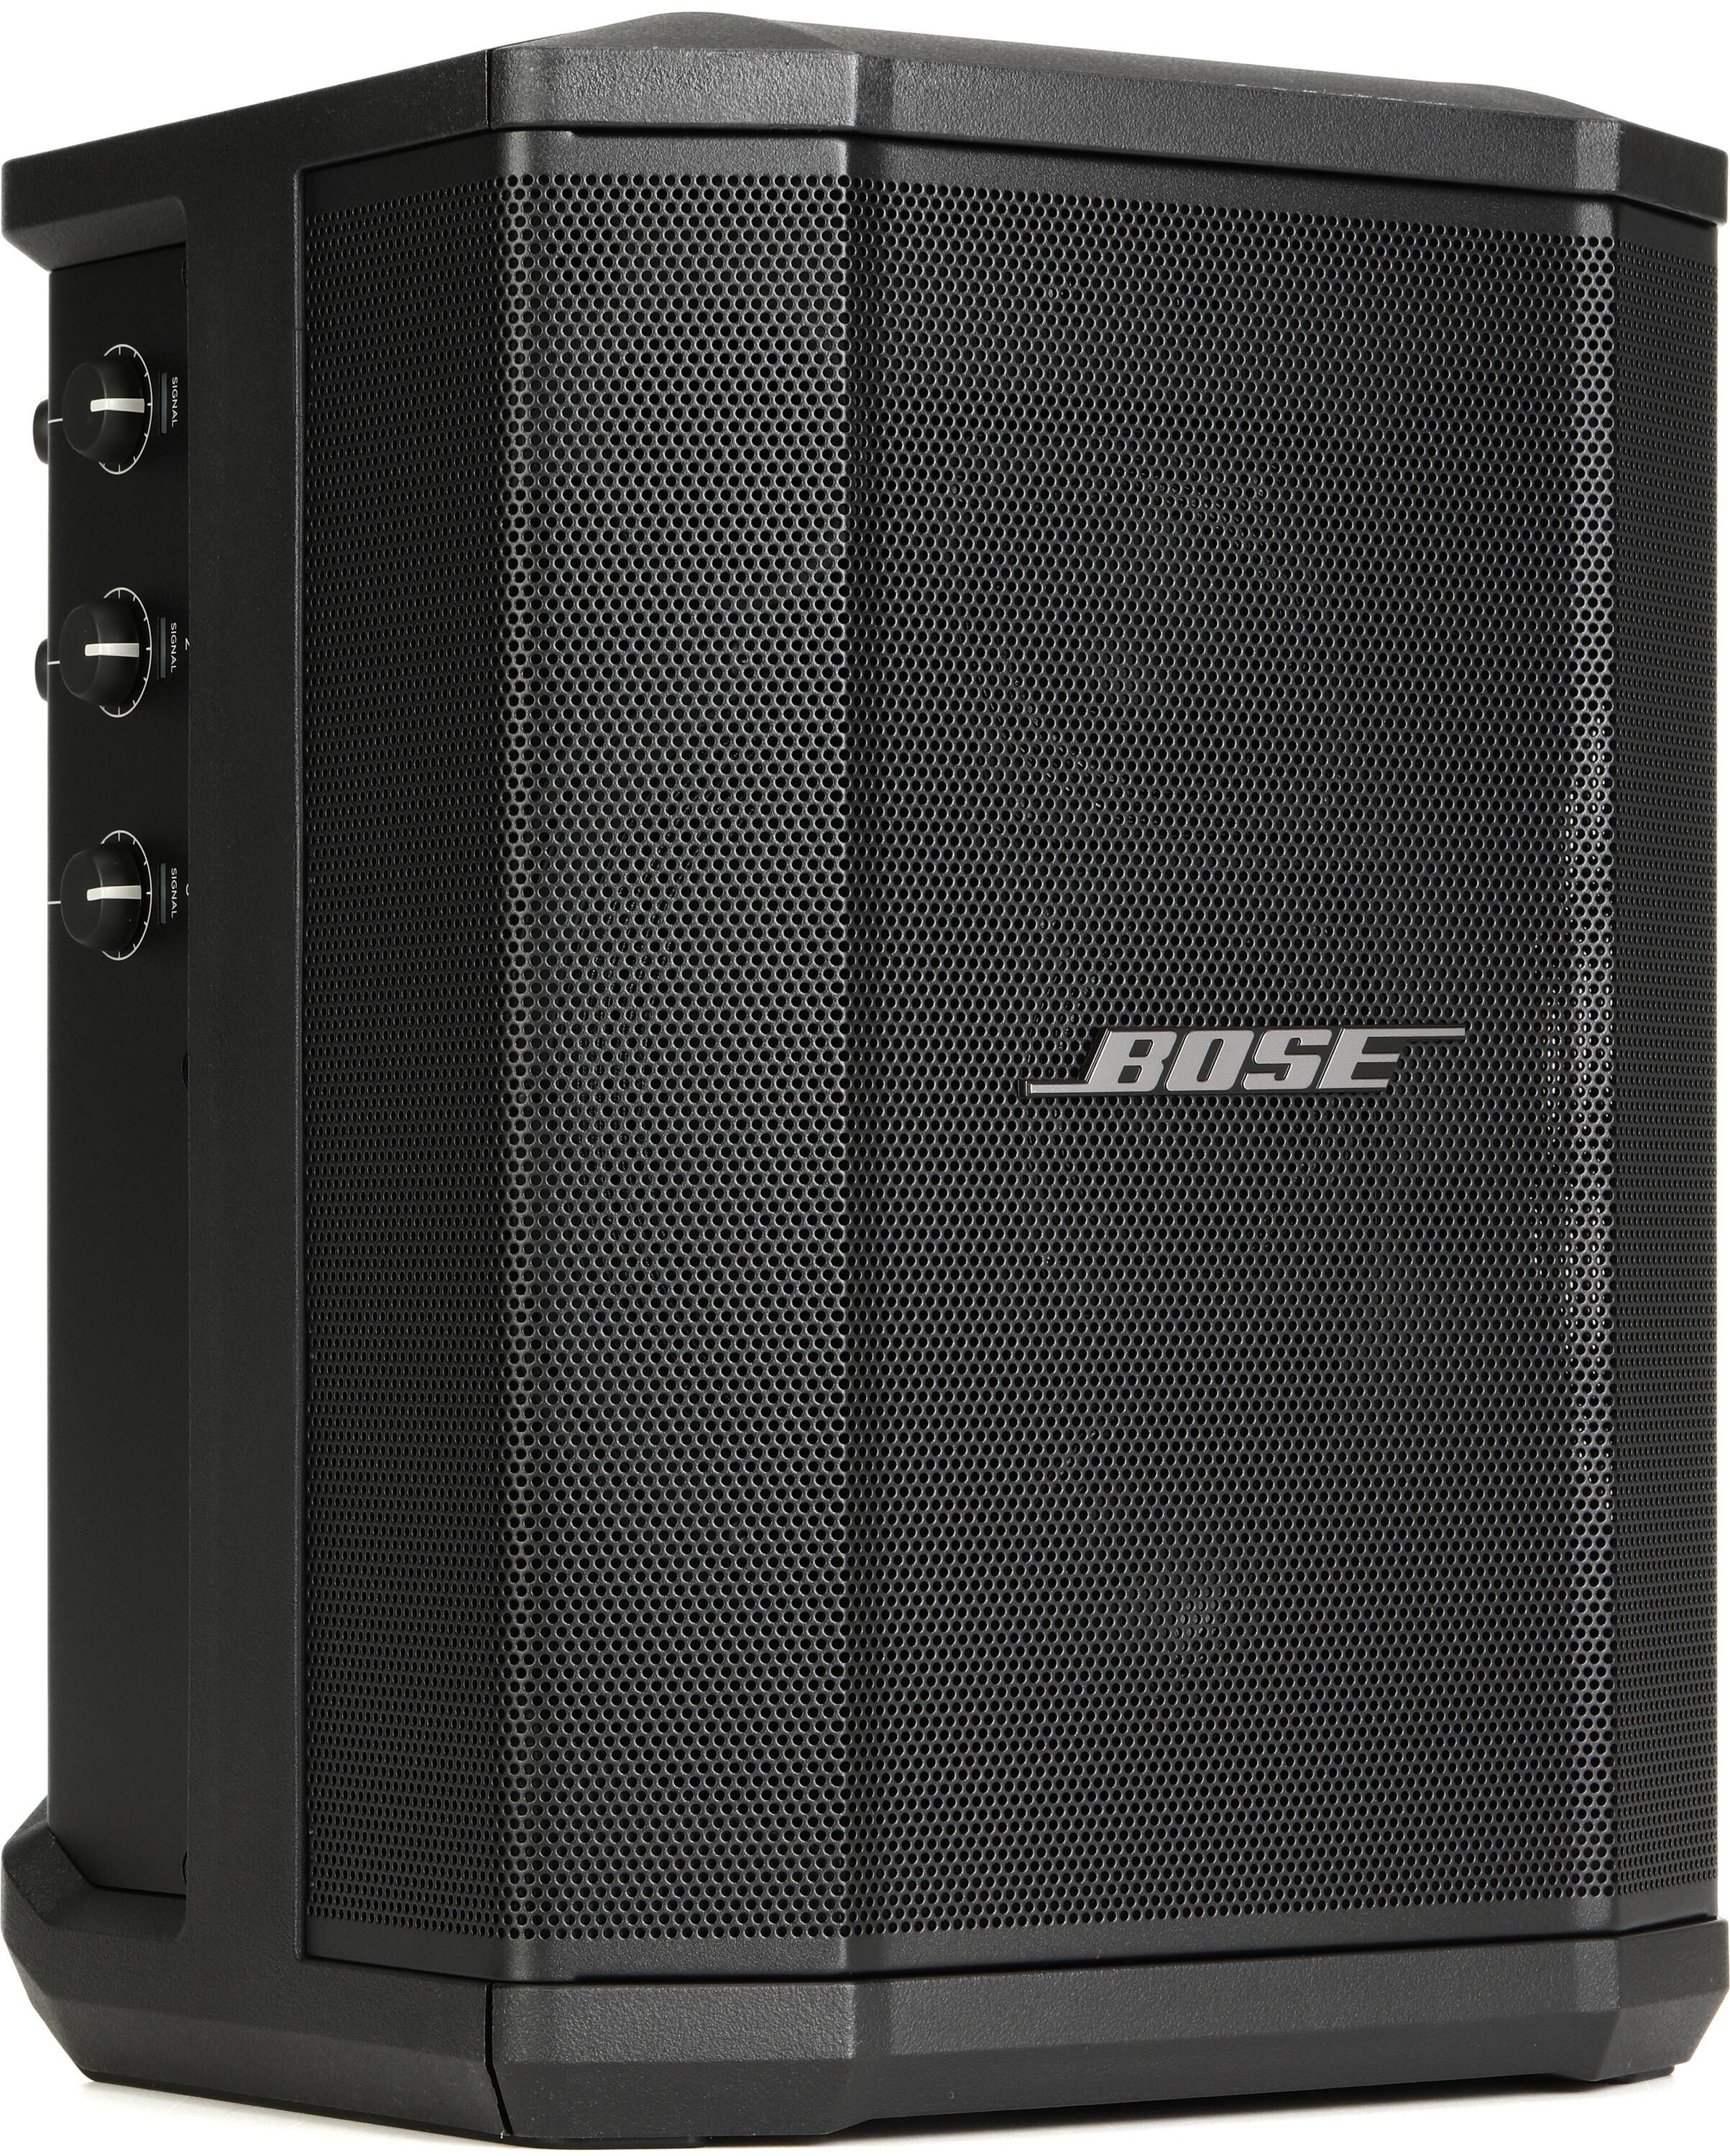 Bose s1. Bose s1 Pro. Bose s1 Pro чехол. Напольная акустическая система Bose. Эстрадная акустика Bose.